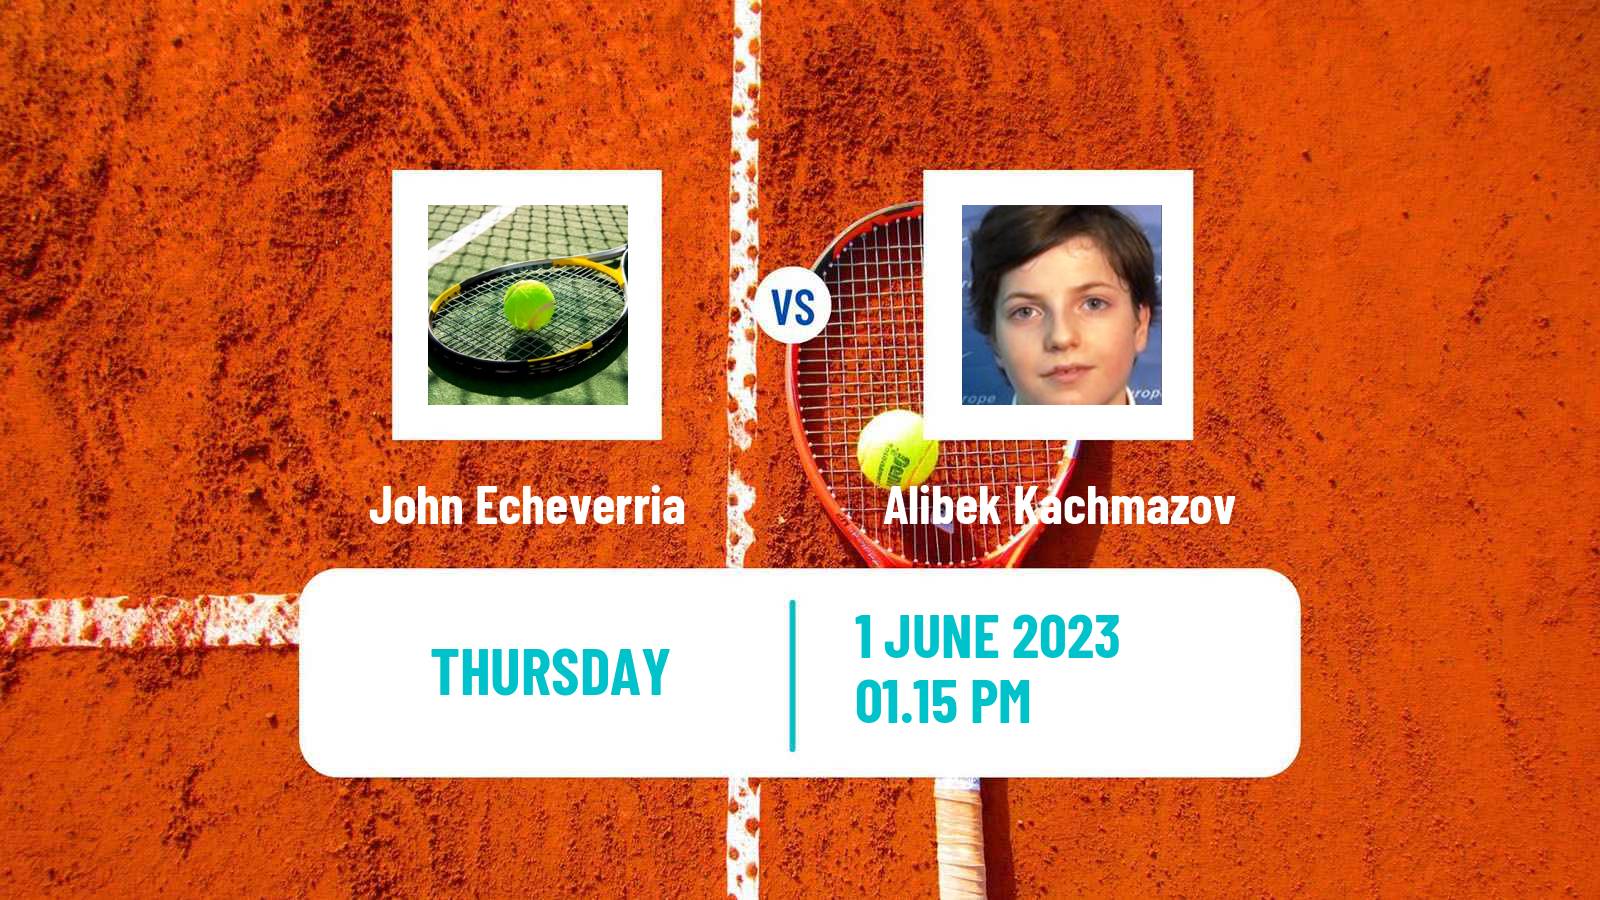 Tennis ITF M25 La Nucia Men John Echeverria - Alibek Kachmazov